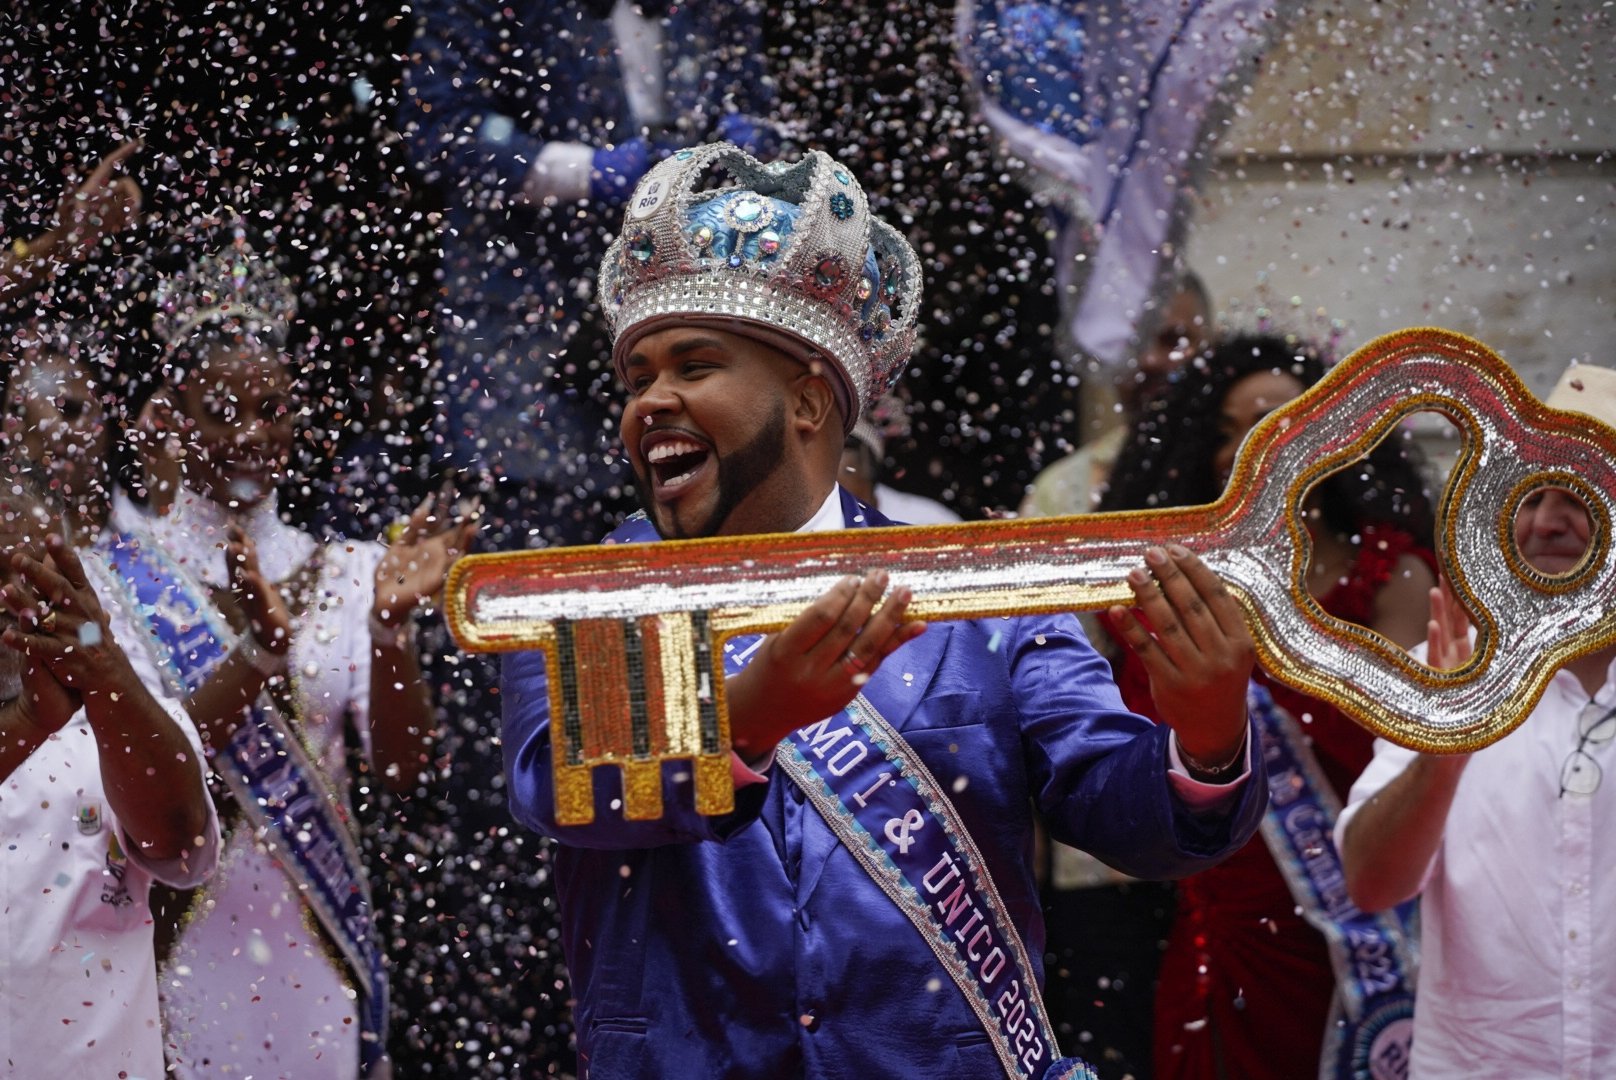 Brazil S Traditional Rio Carnival Kicks Off After 2 Year Hiatus Daily Sabah